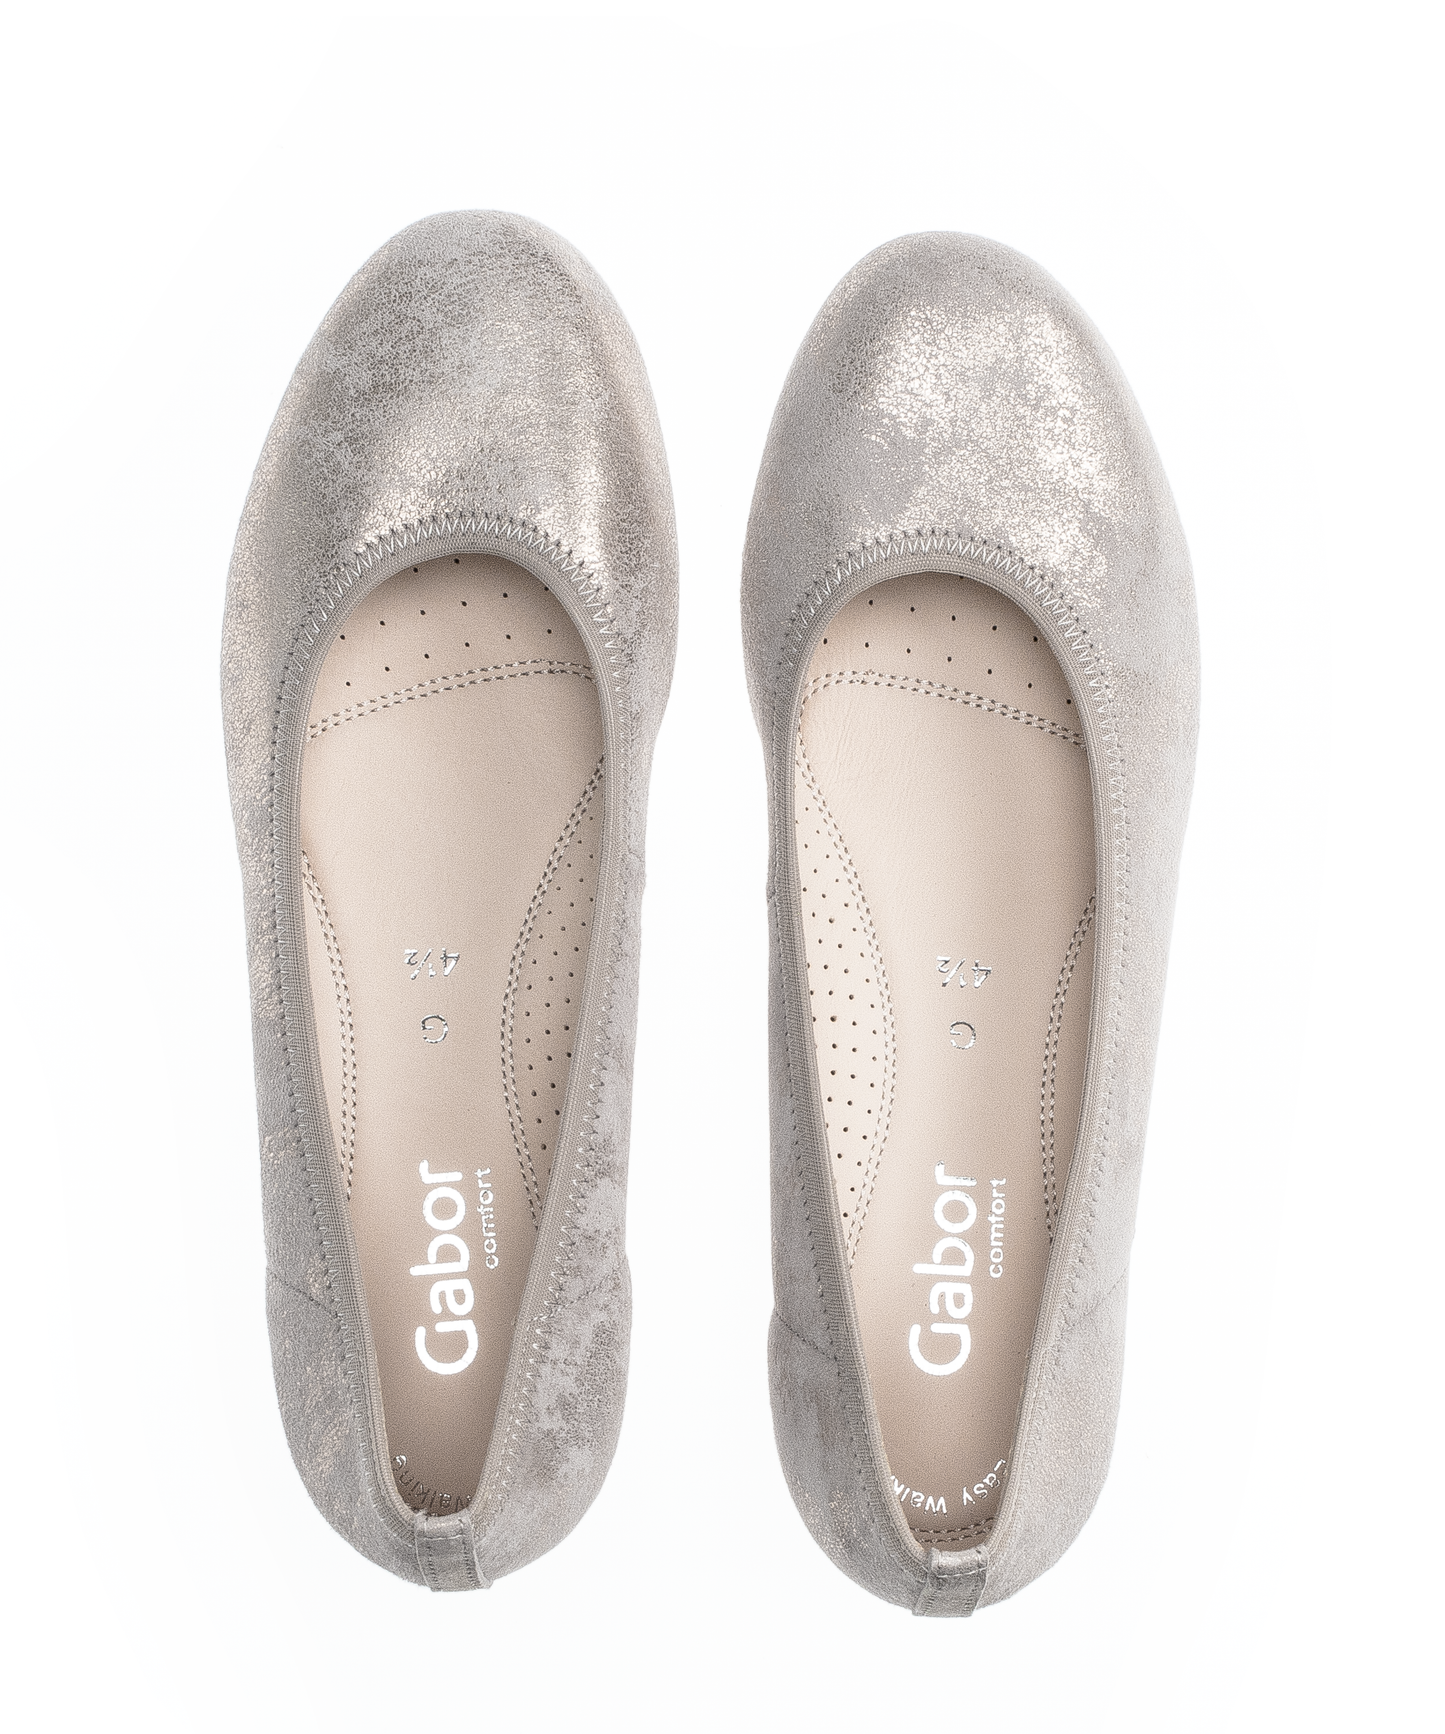 Gabor 42.641.95 Comfort Gold Metallic Slip On Wedge Shoes